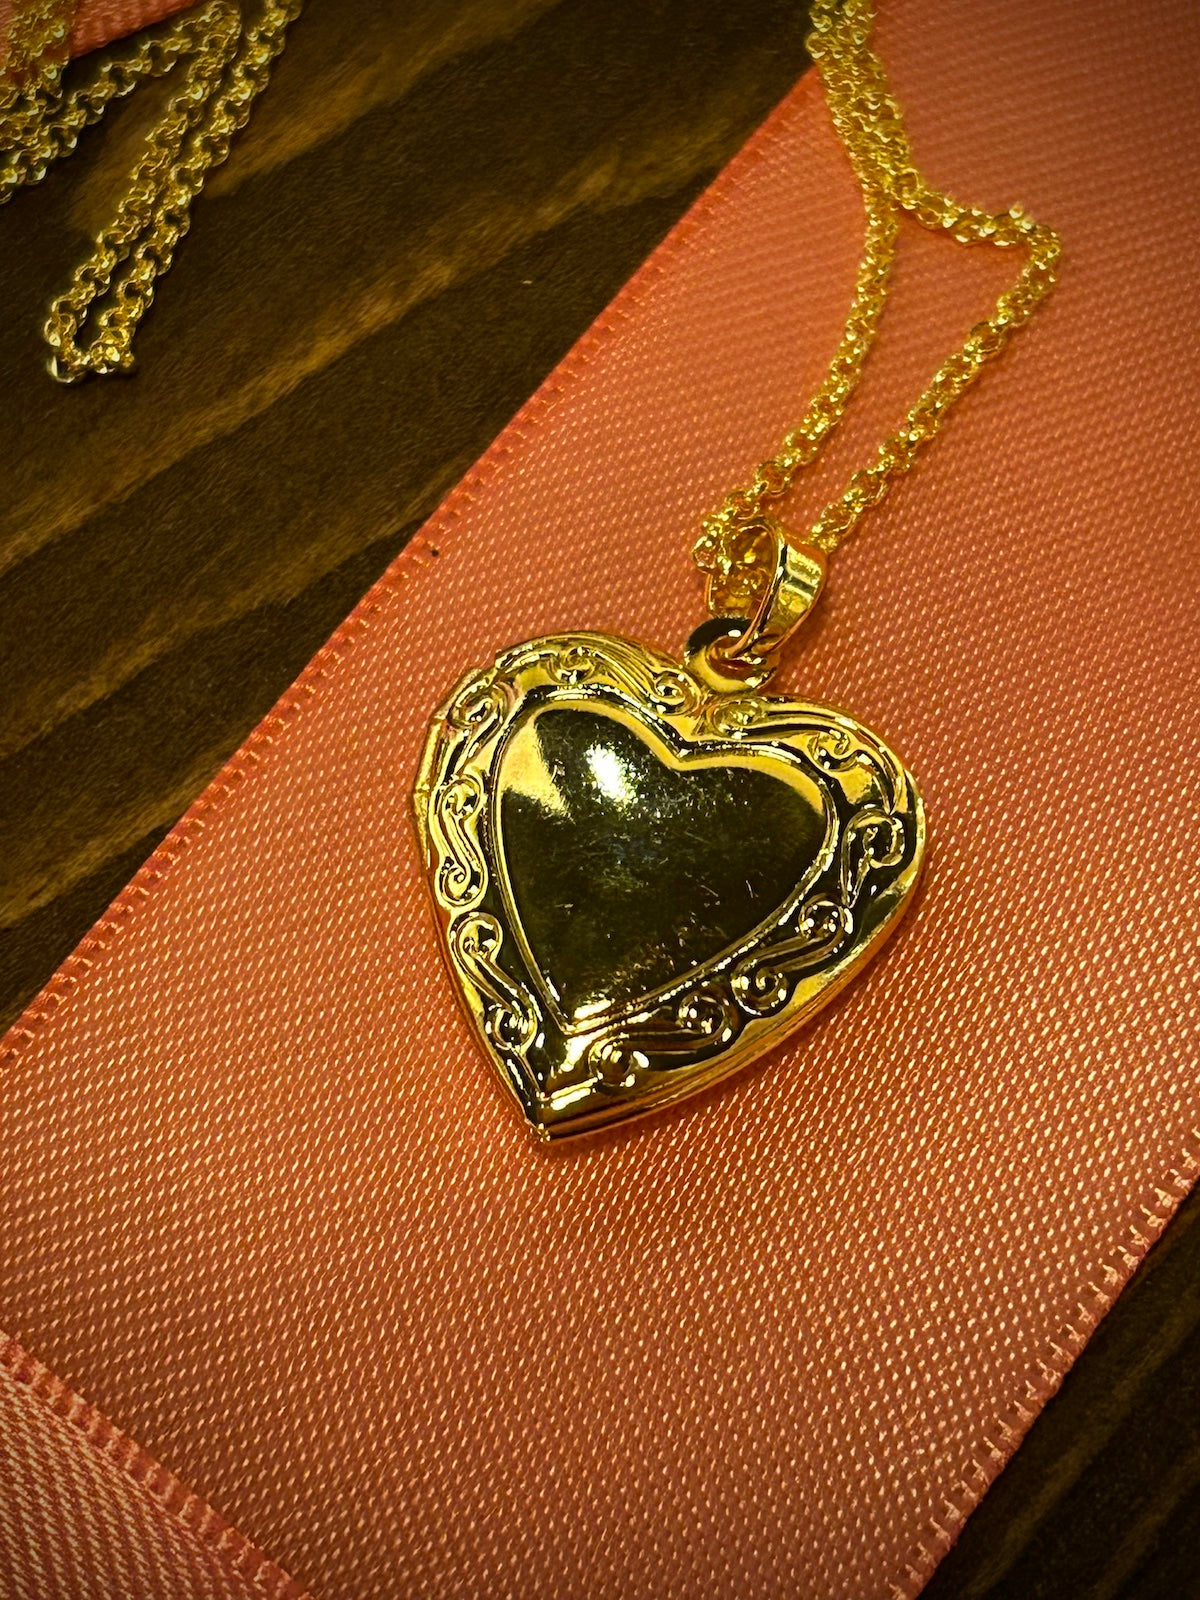 "Forever Love" Gold Vermeil Heart Locket Necklace